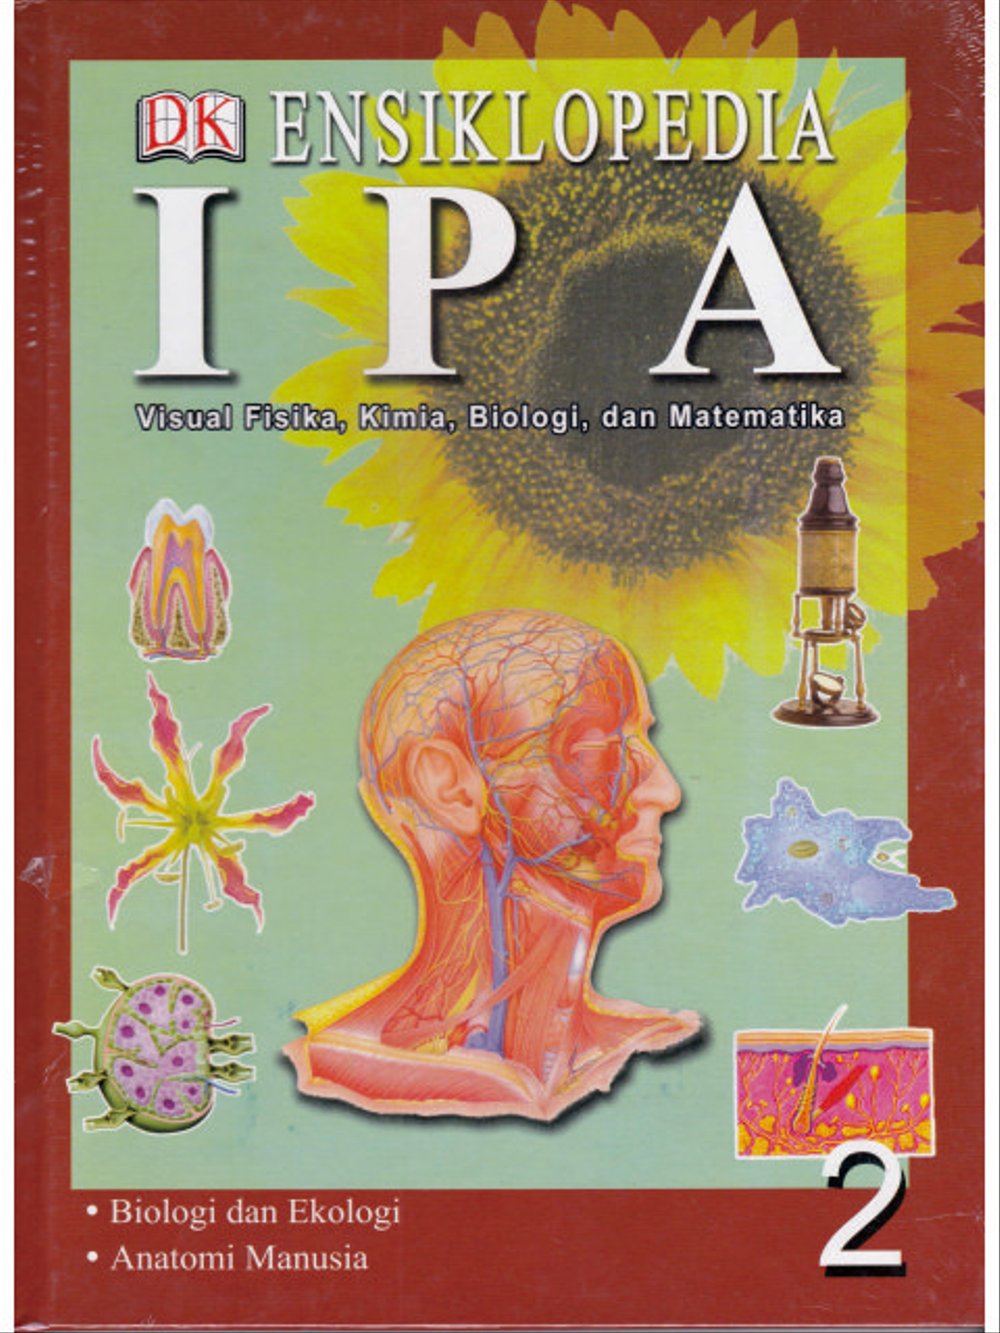 Ensiklopedia IPA Jilid 2 : Visual Fisika, Kimia, Biologi, dan Matematika